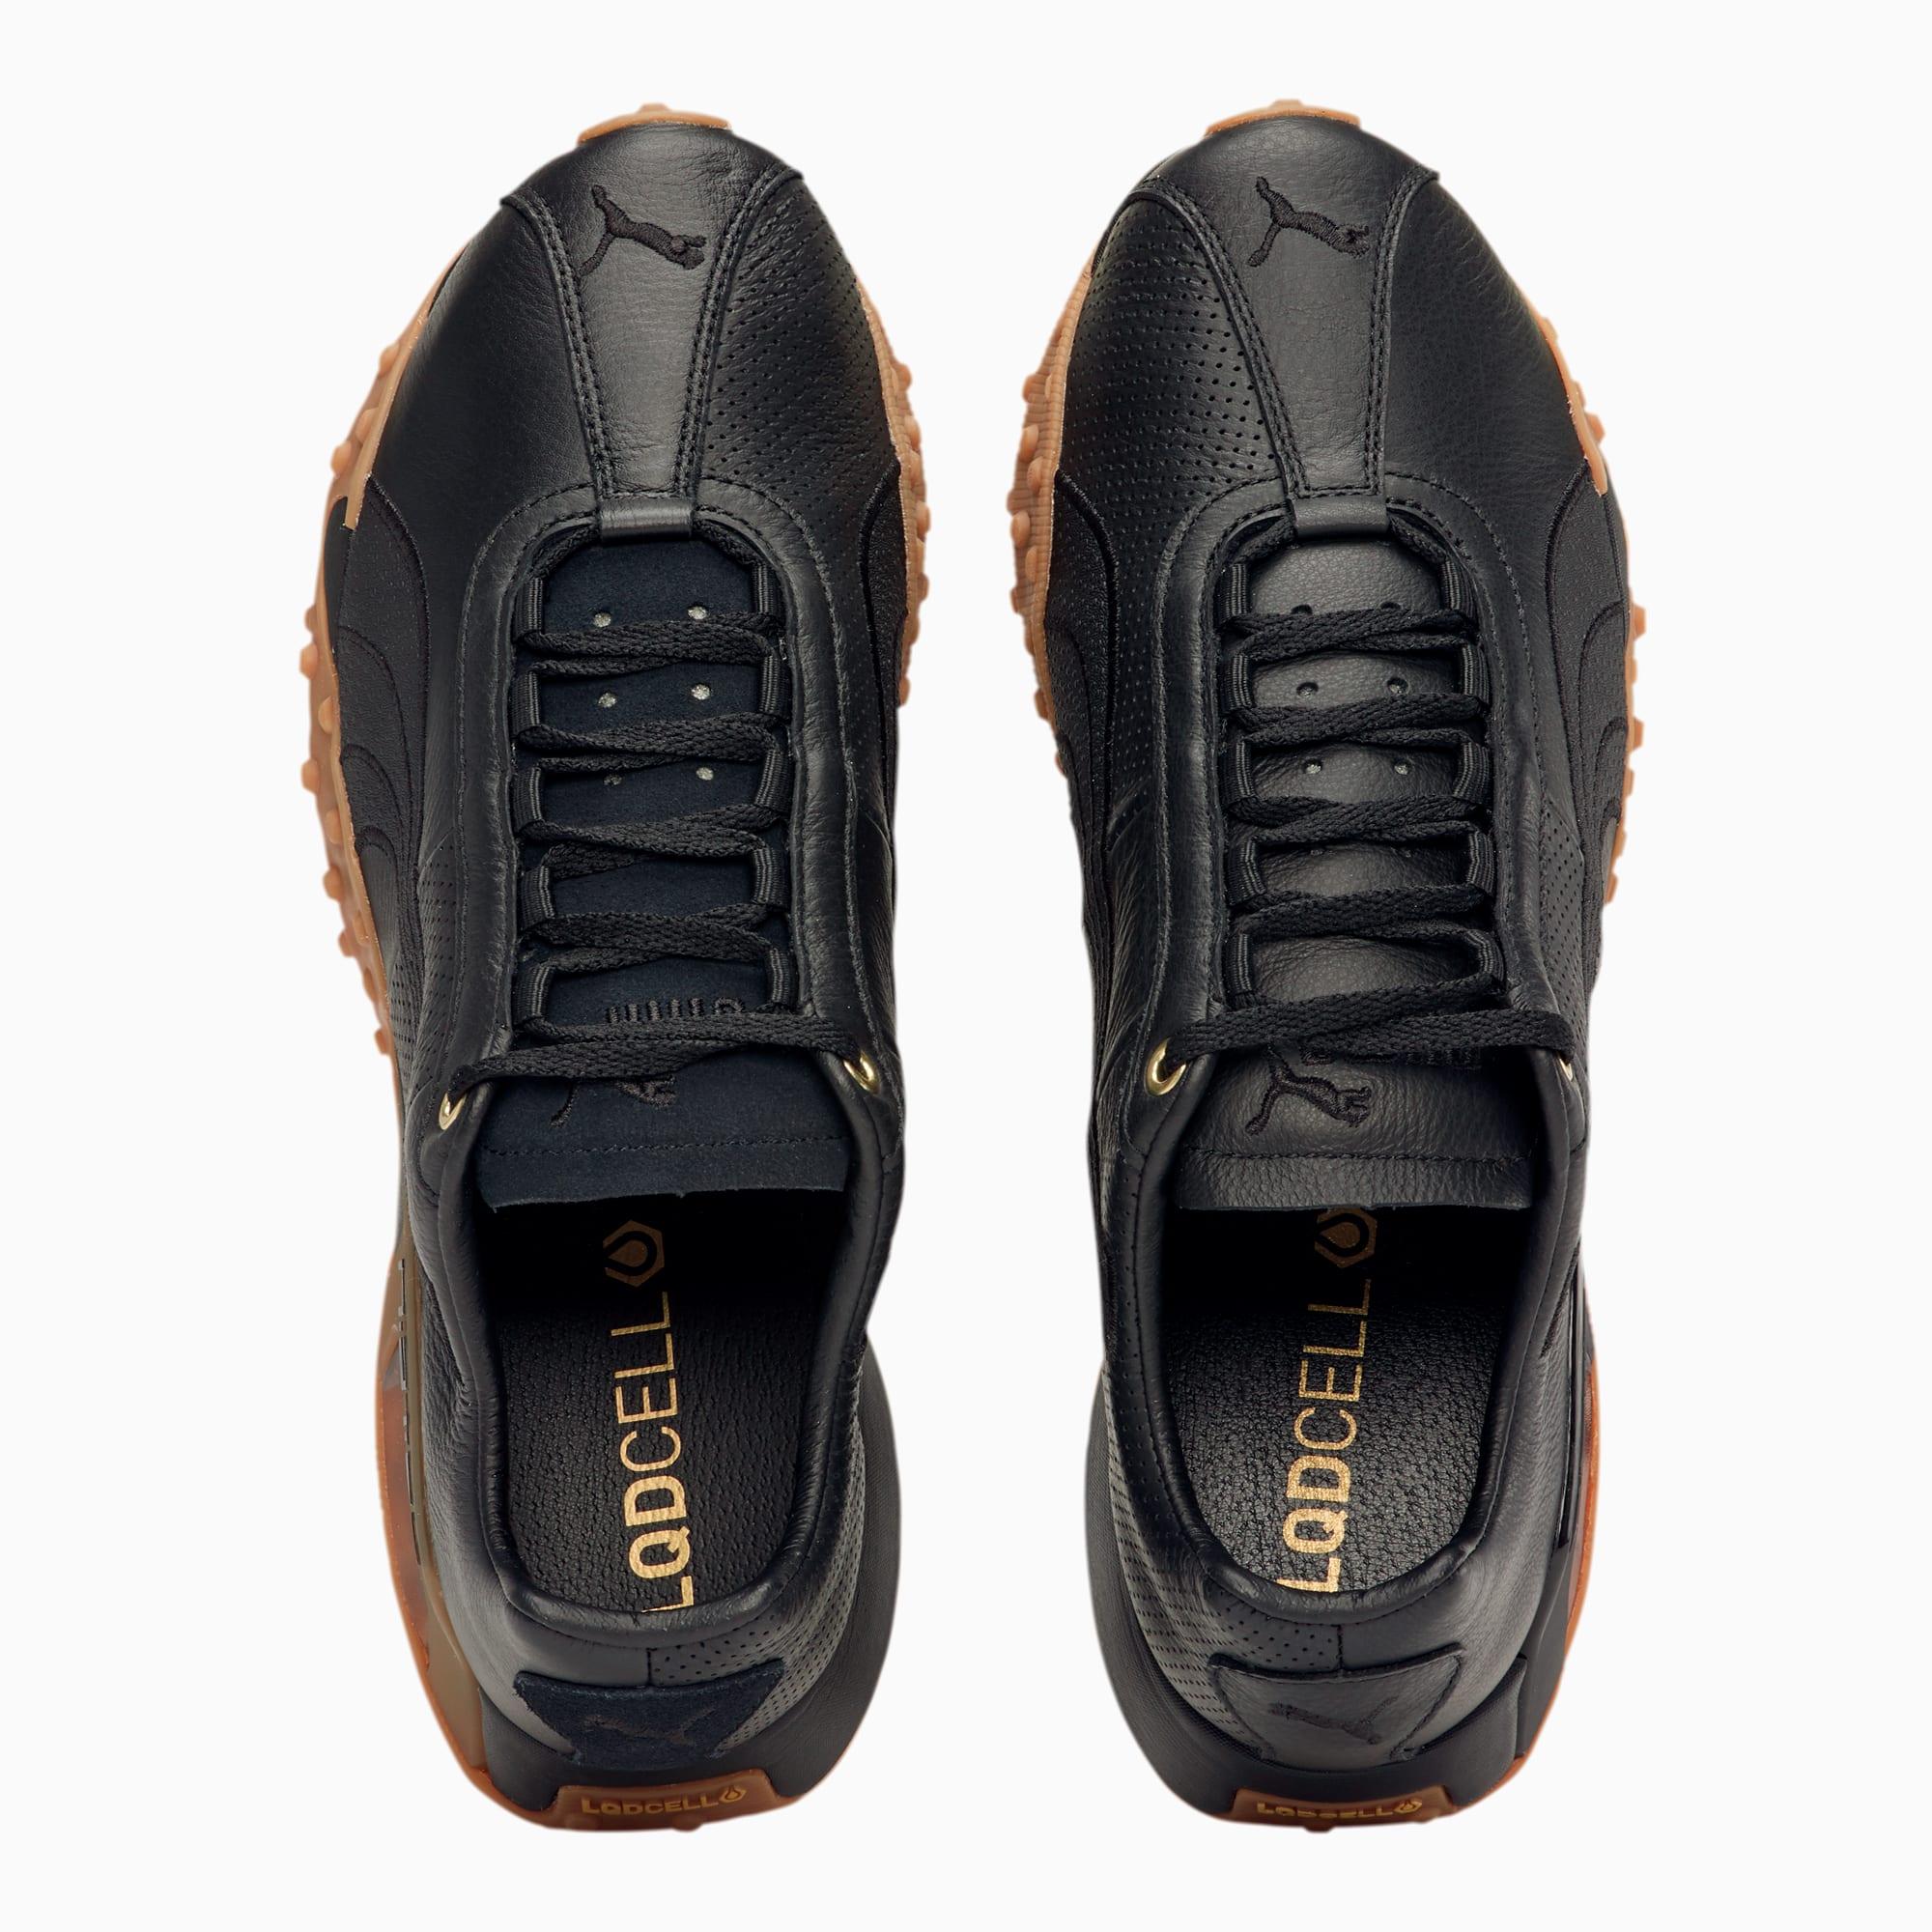 PUMA Rubber H.st.20 Premium Training Shoes in Black for Men - Lyst